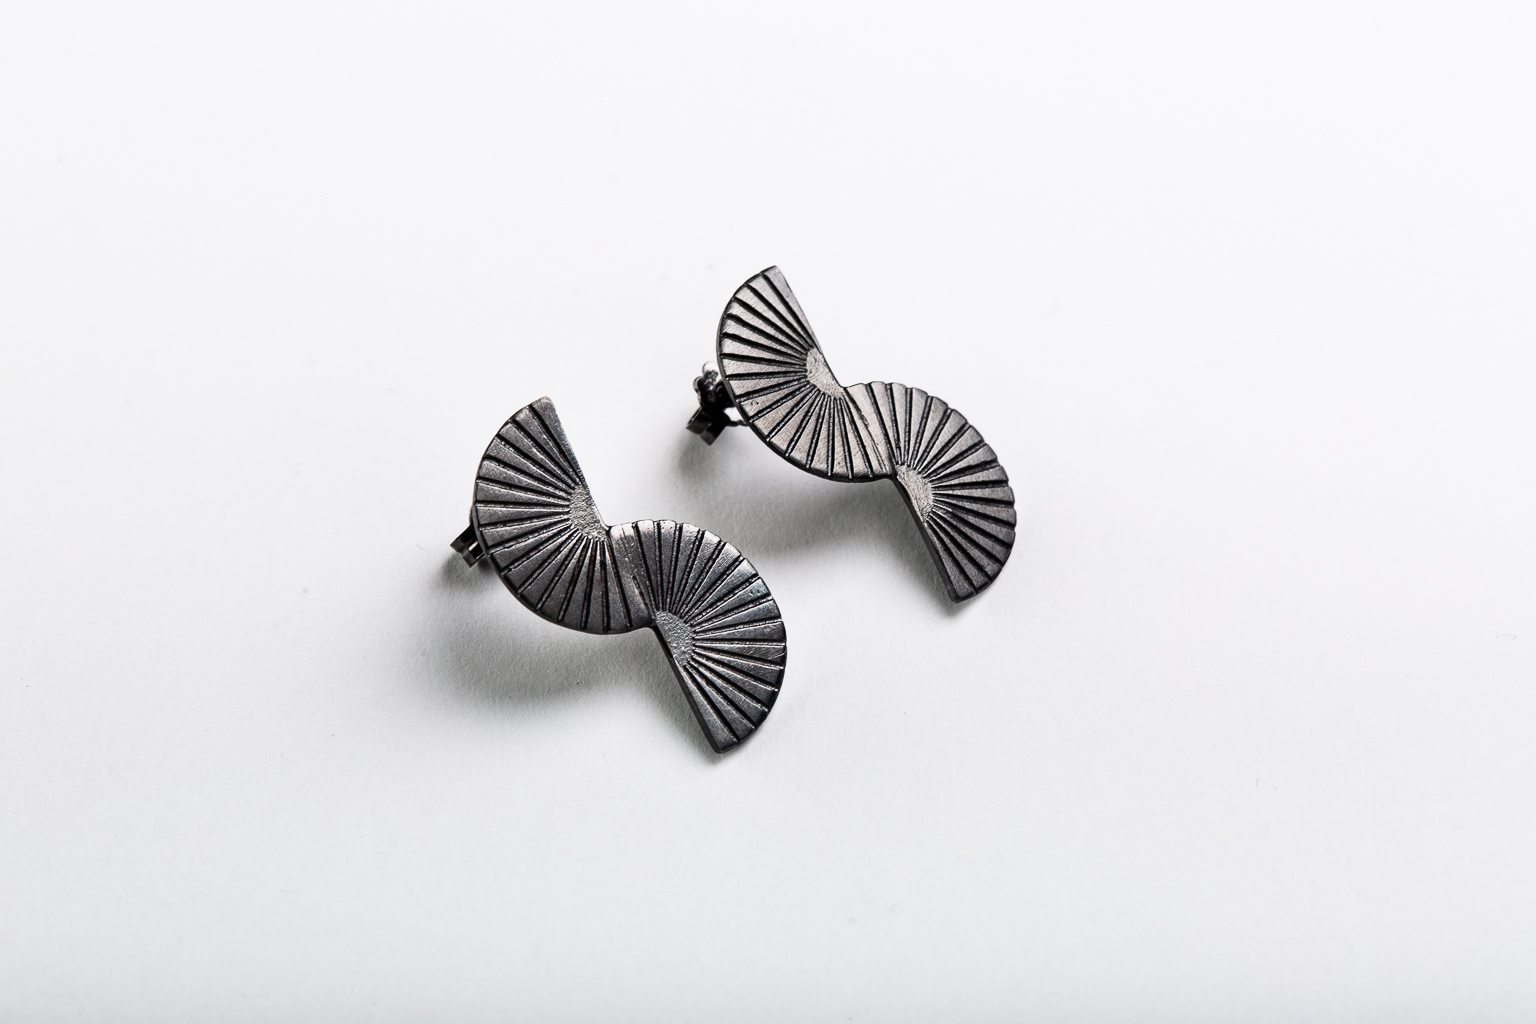 Black-plated "Harmony" earrings